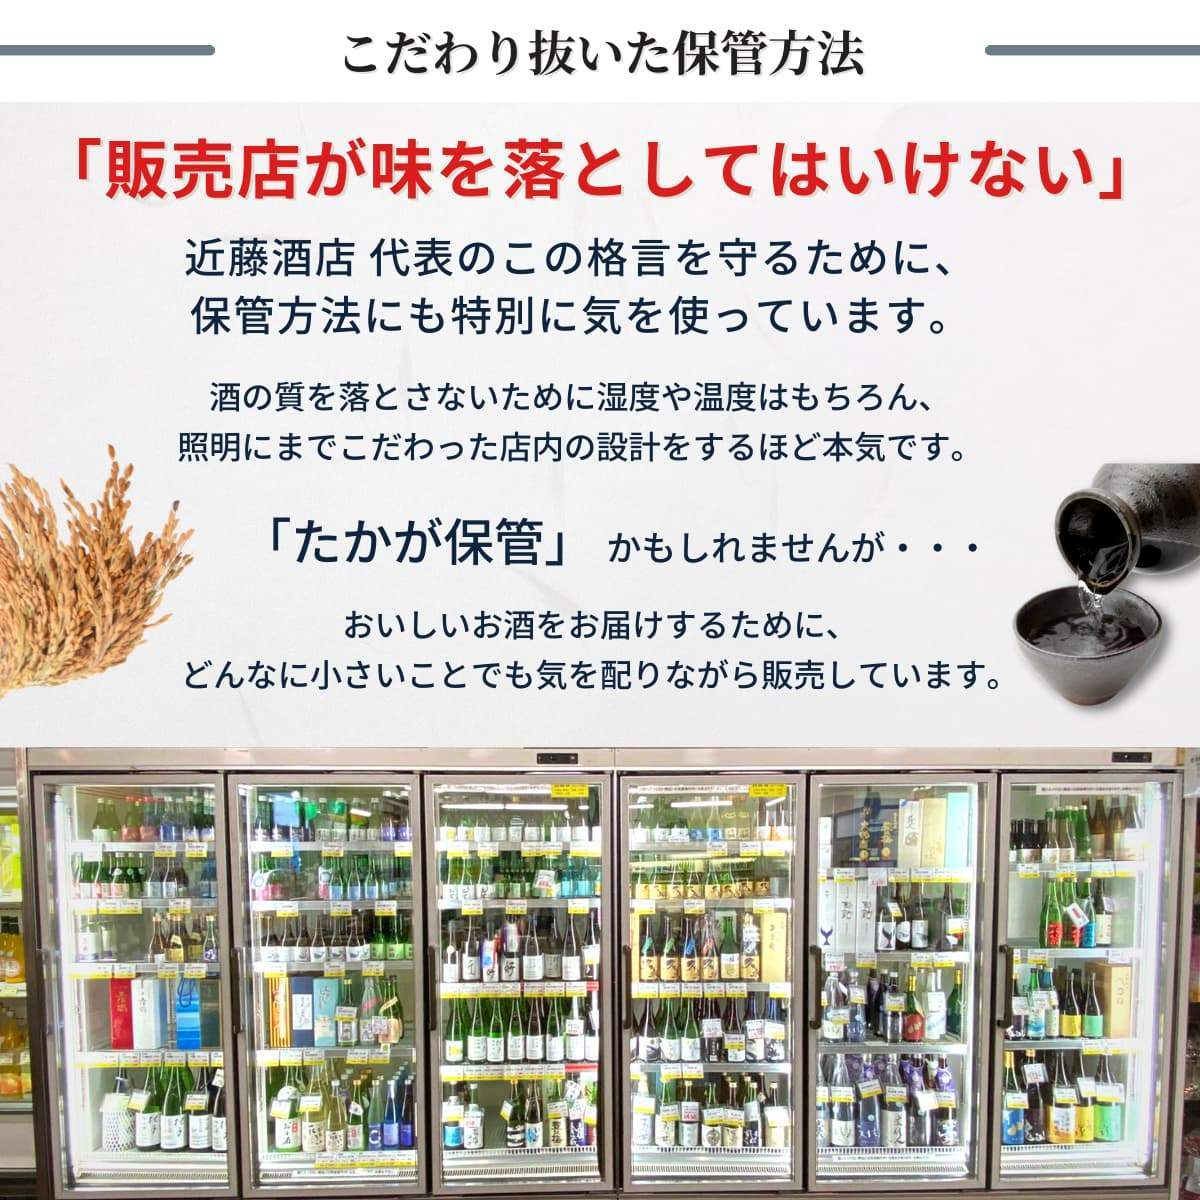 【通販限定】日本酒飲み比べセット 300mL 5本 土佐酒 亀泉 司牡丹 久礼 酔鯨 桂月